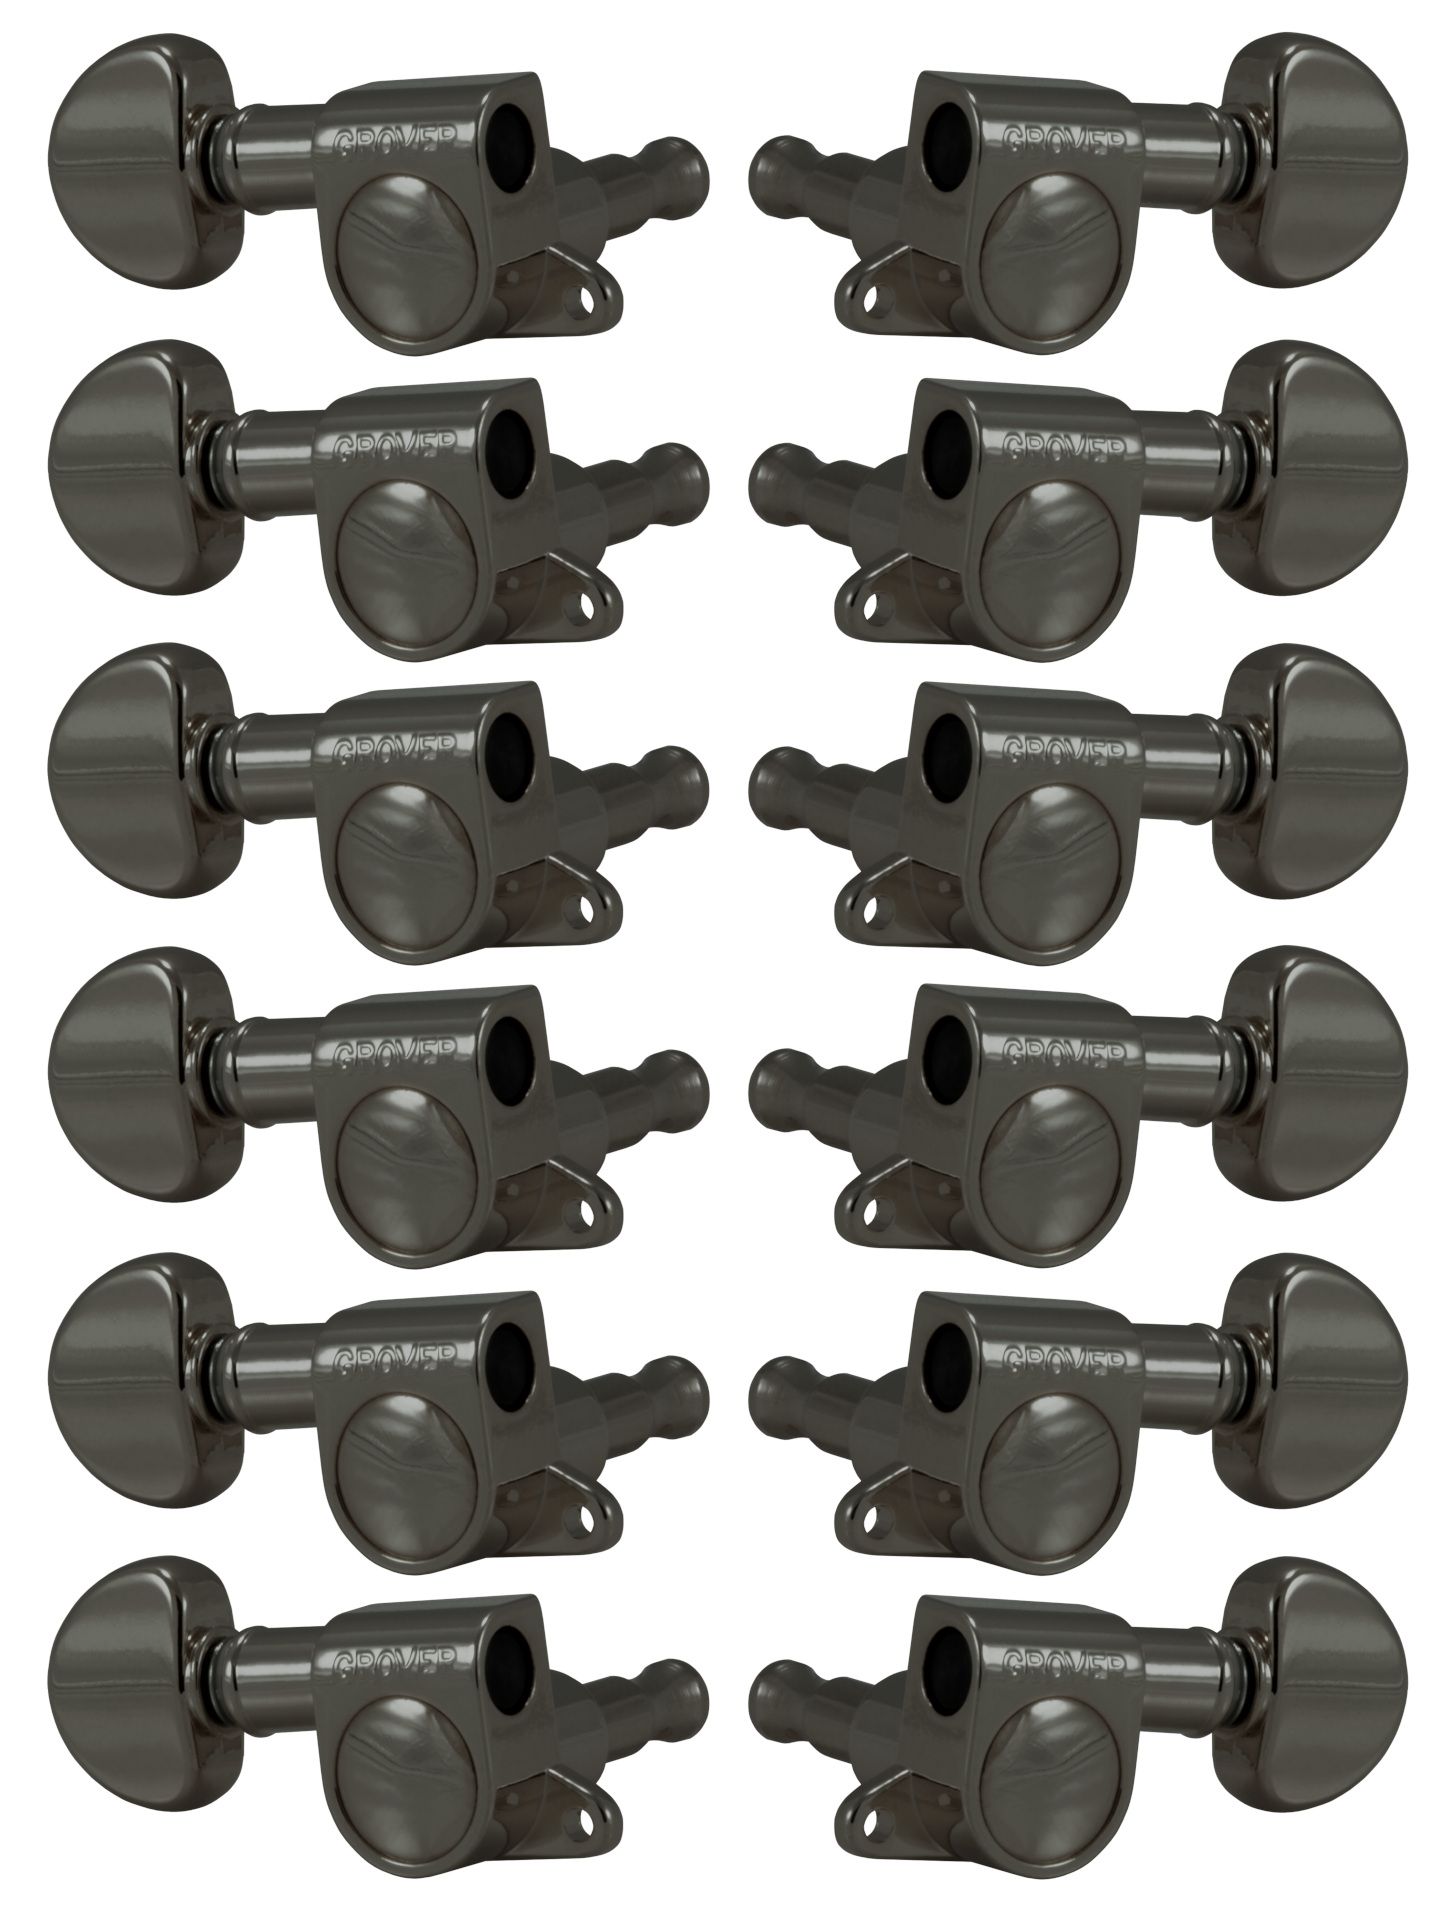 Grover 205BN12 Mini Rotomatics with Round Button - 12-String Guitar Machine Heads, 6 + 6 - Black Nickel